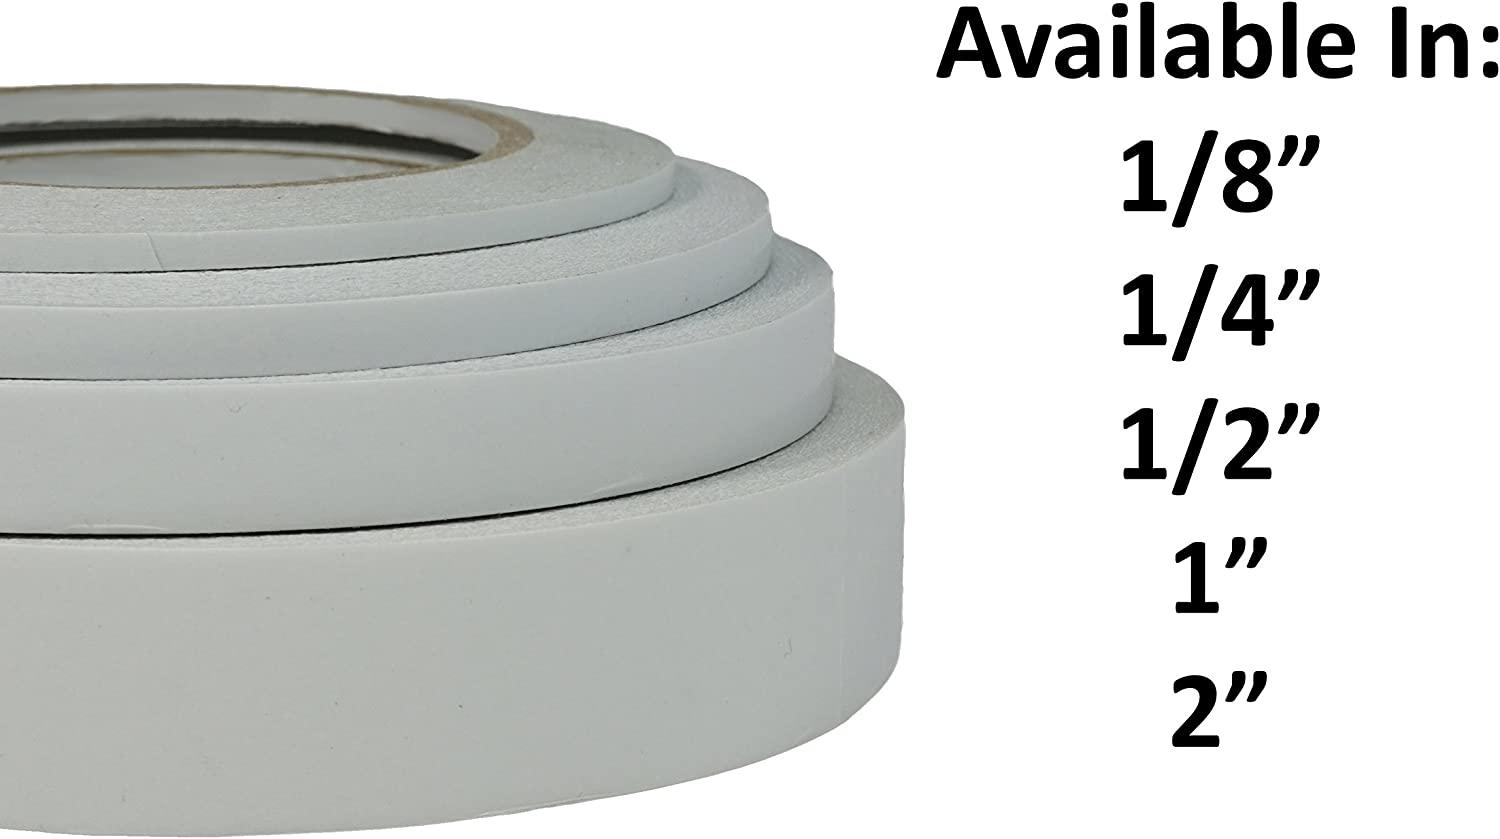 Scrapbook Adhesives Foam Tape - White - 1/2 inch x 108 feet - BIG